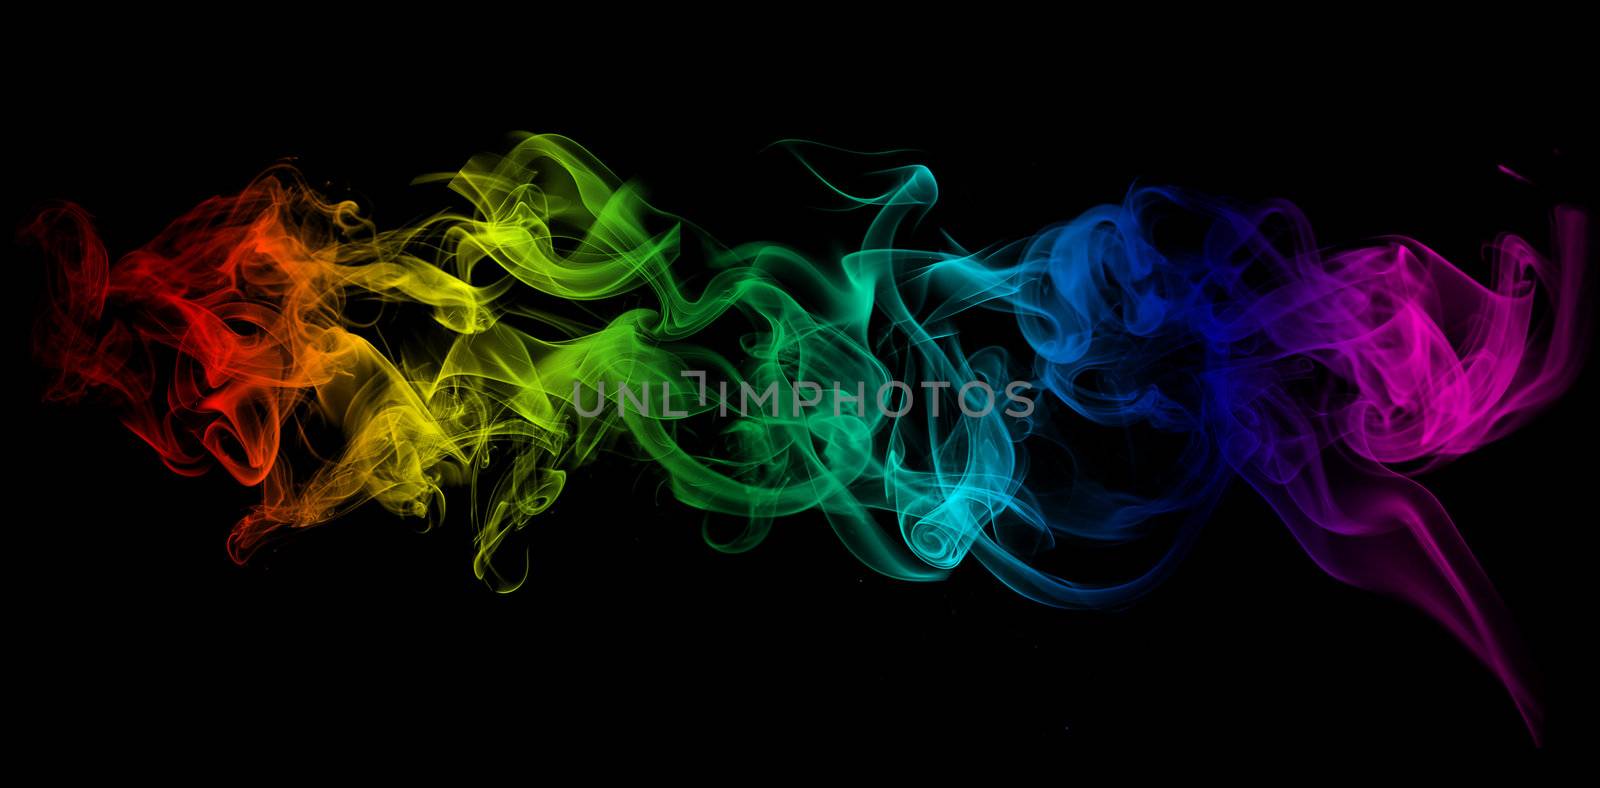 Colorful smoke by ailani_graphics